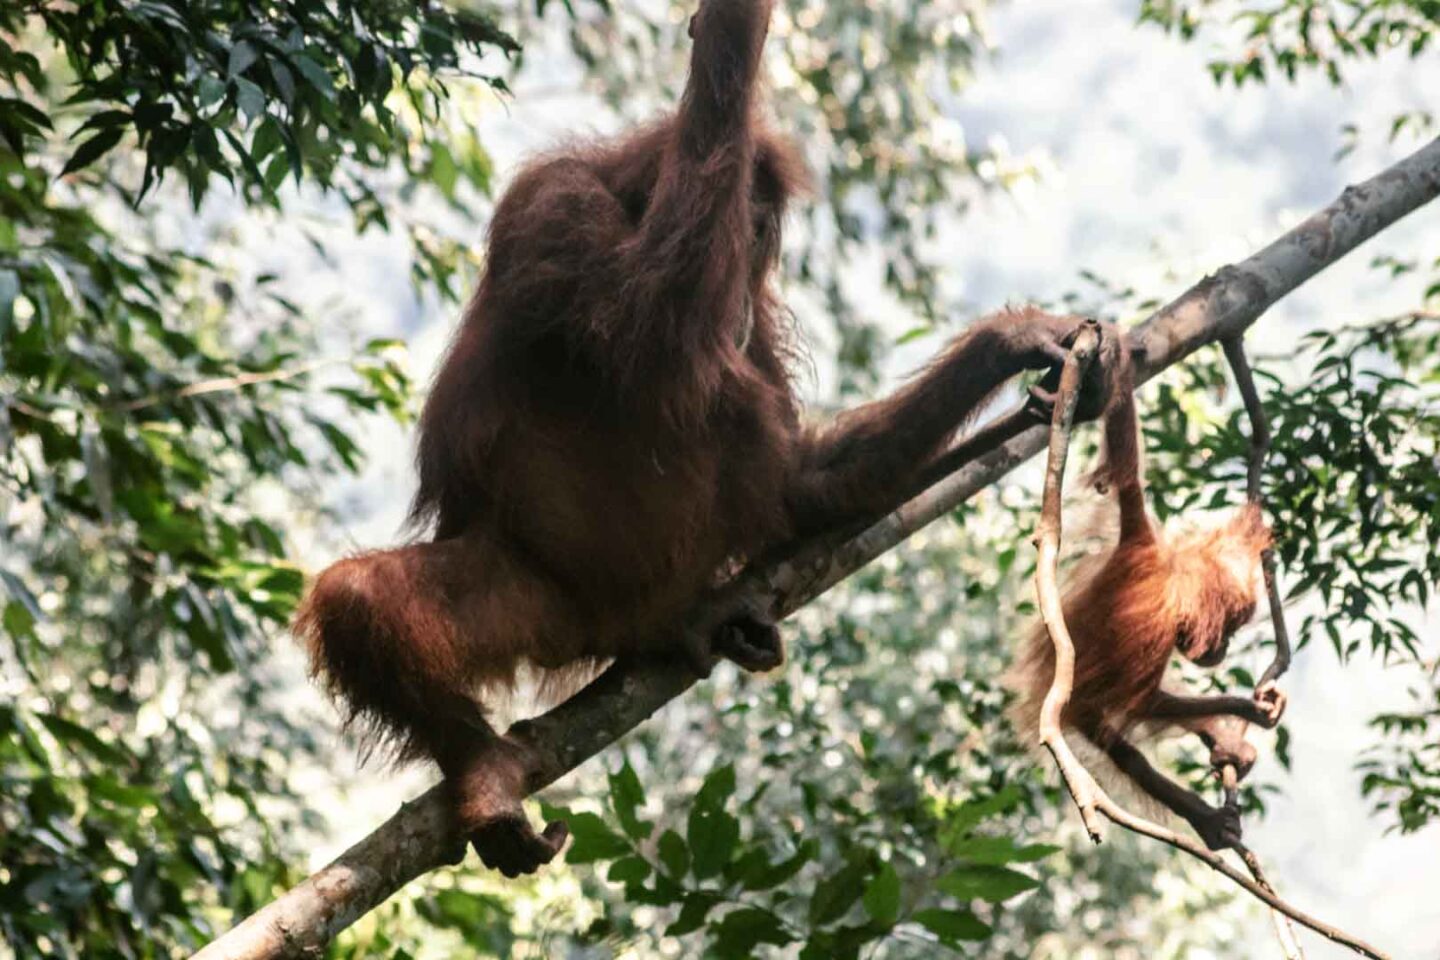 Mother and baby orangutan - Sumatra travel guide